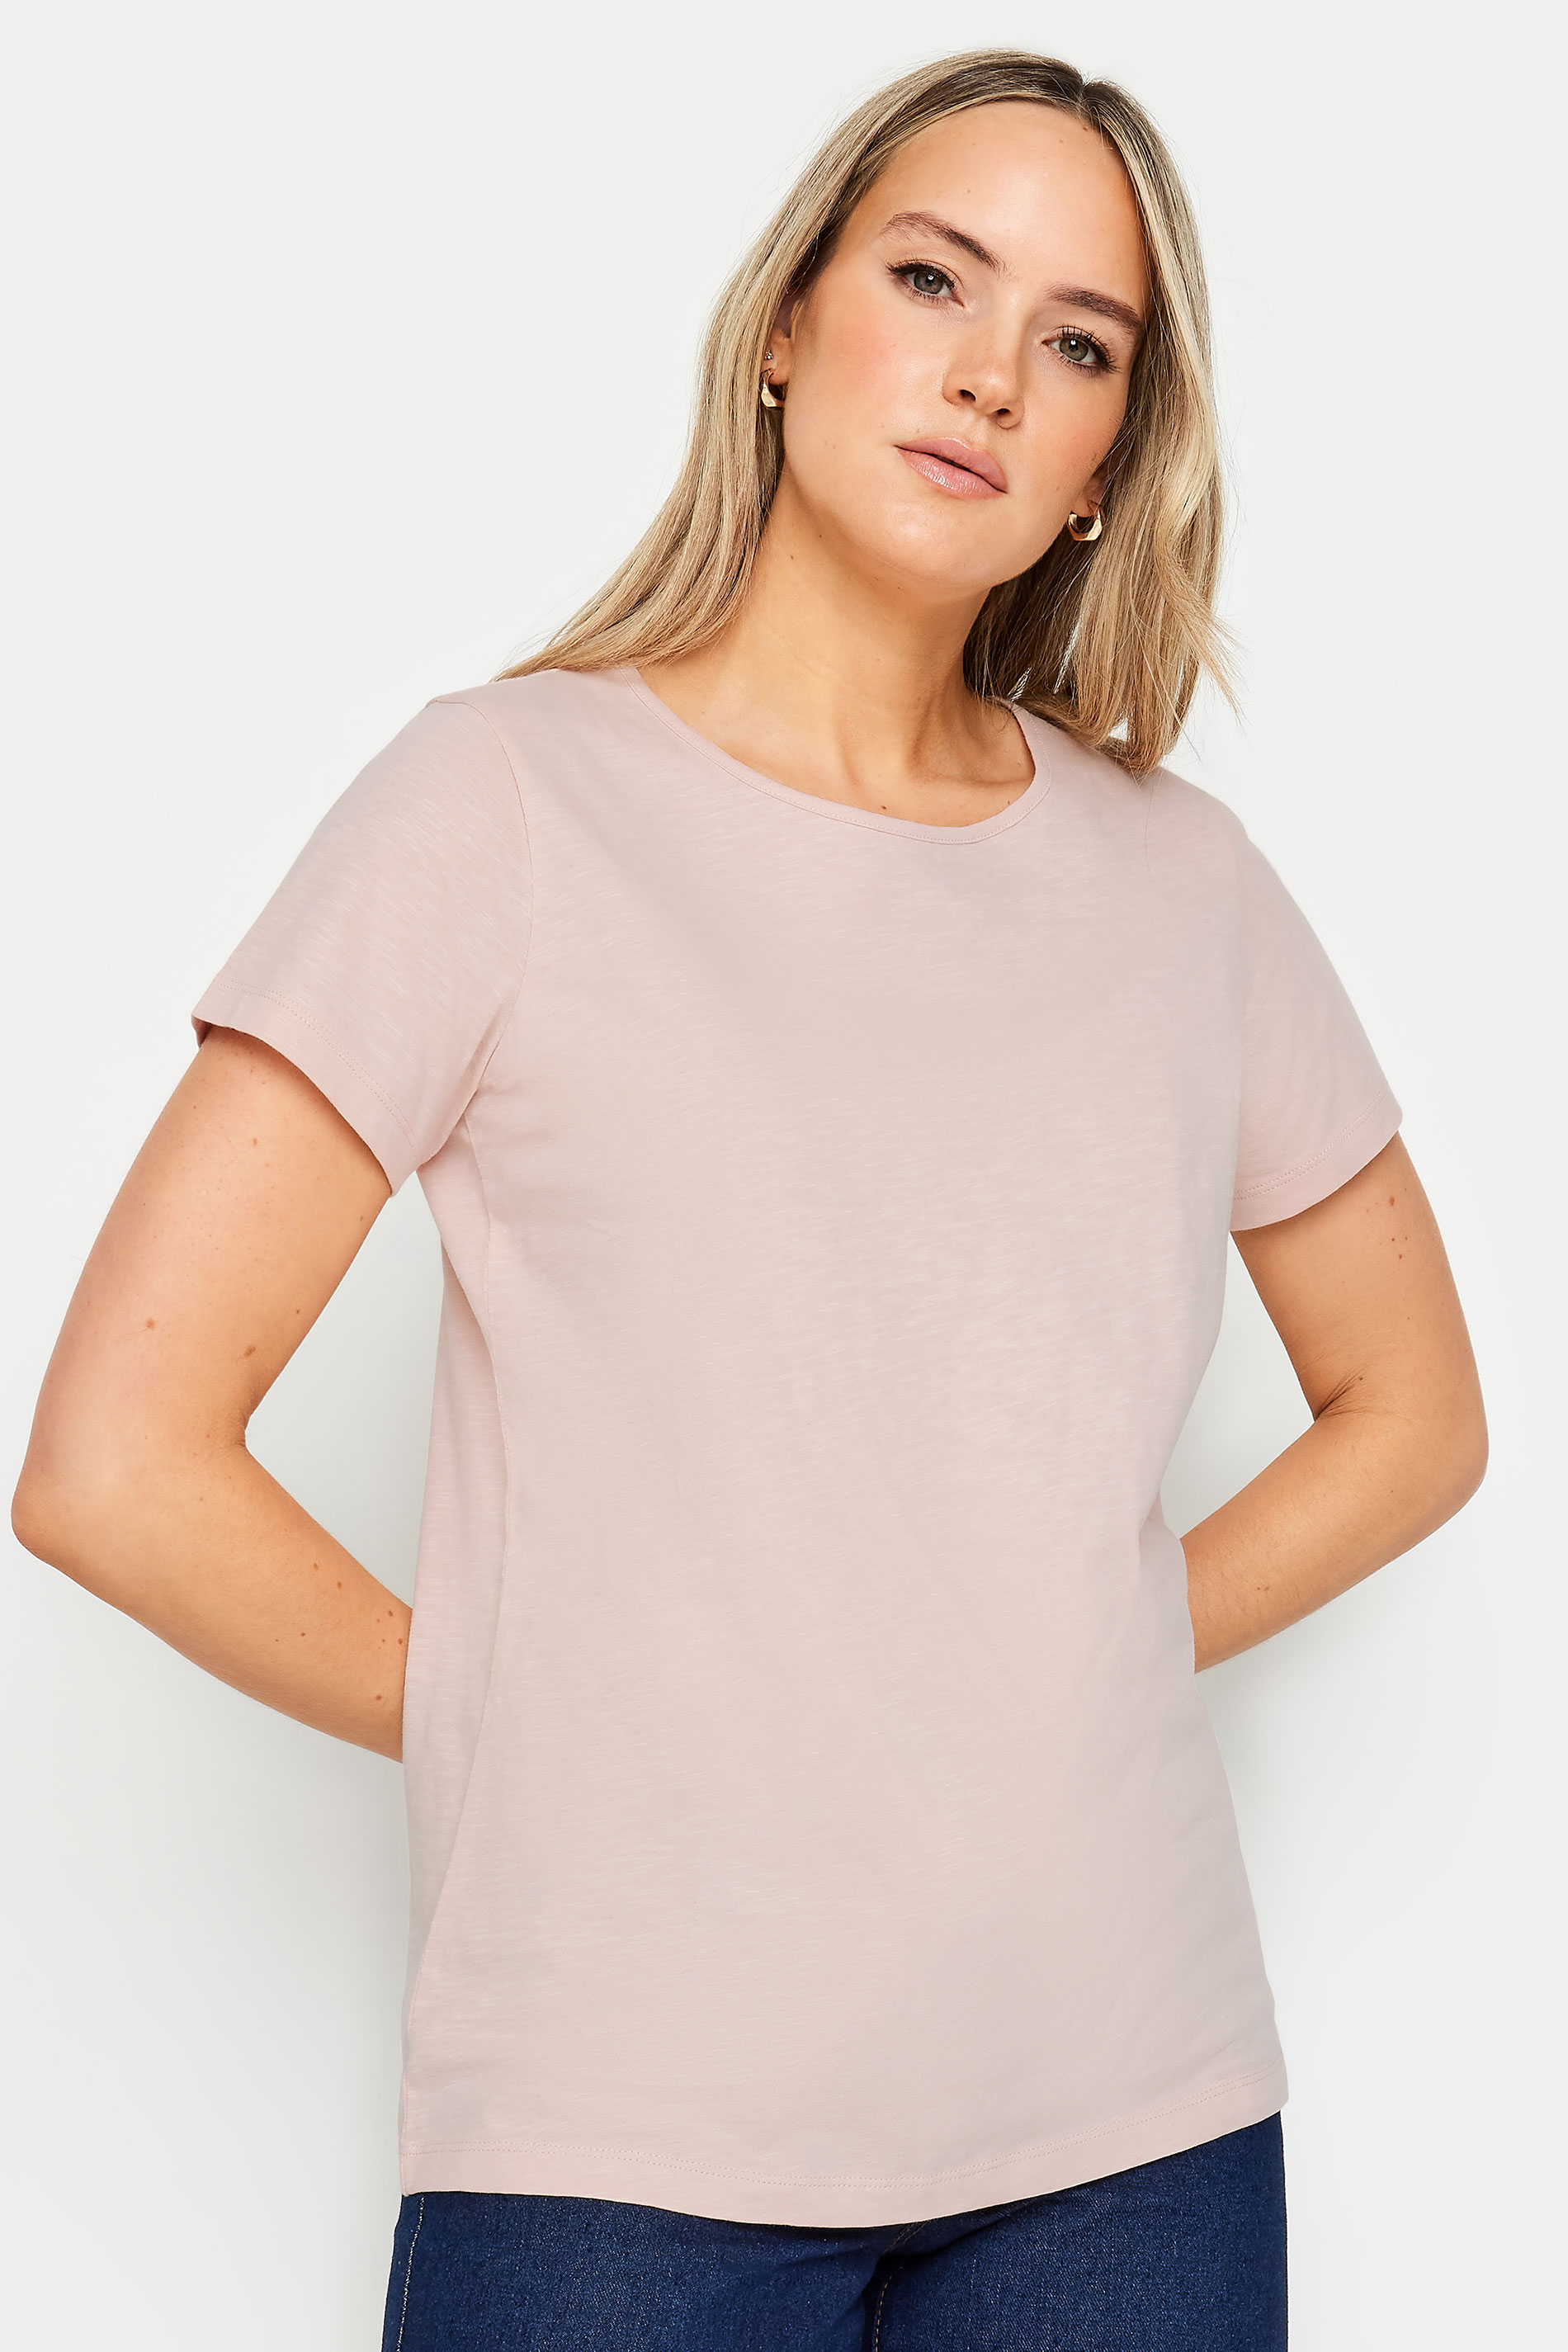 LTS Tall Womens Blush Pink Cotton T-Shirt | Long Tall Sally 1